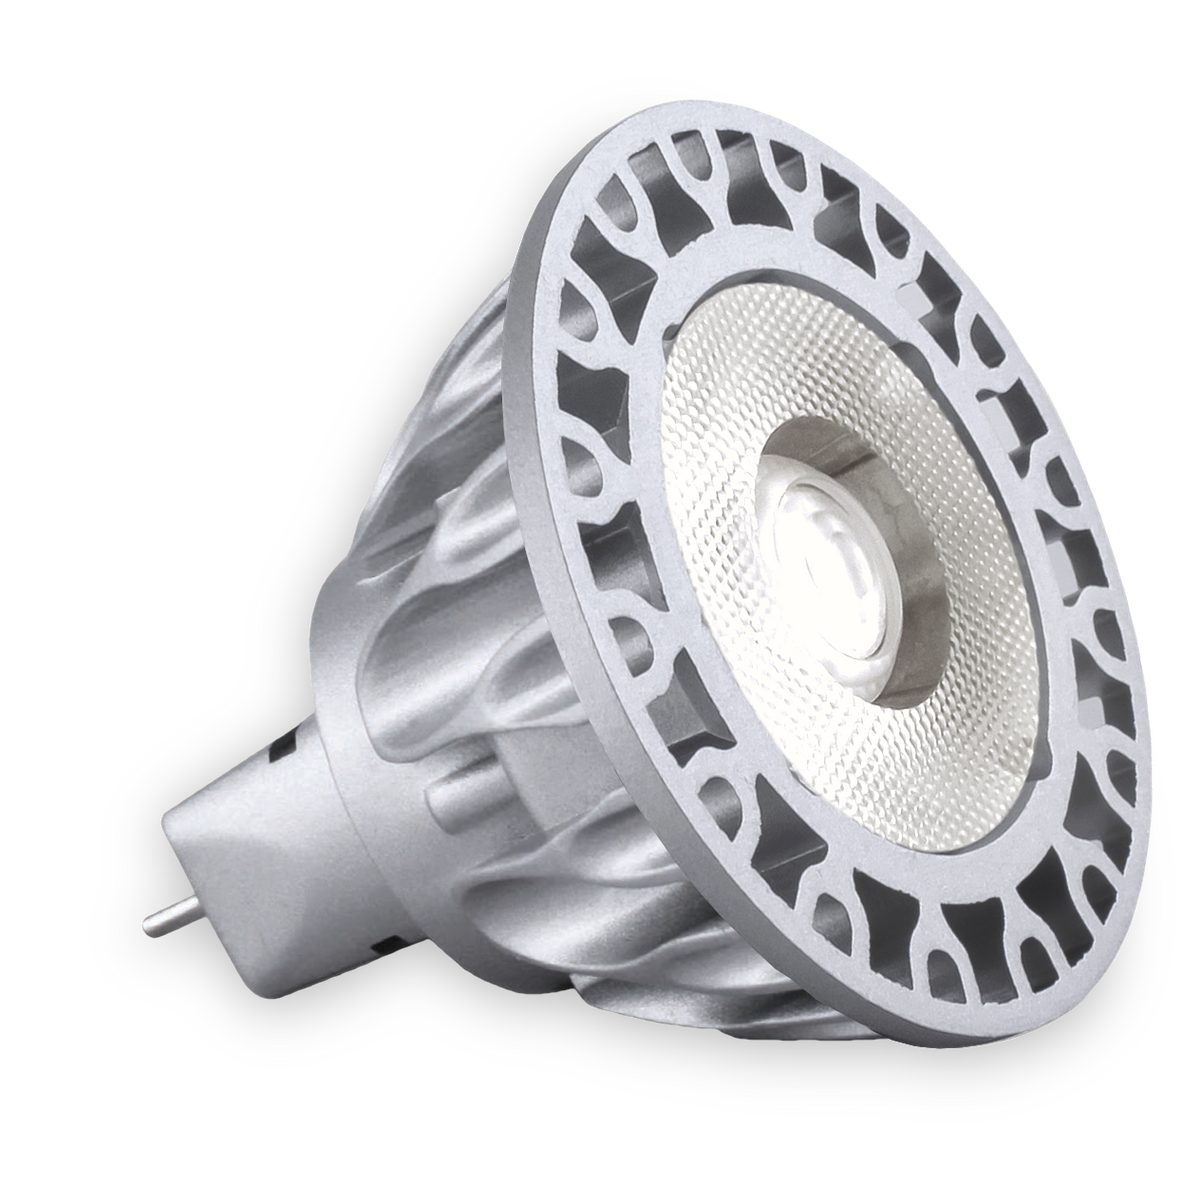 Soraa LED-Leuchtmittel Soraa Vivid 3 MR16 GU5.3 - Vollspektrum LED - 7.5Watt, 25°, GU5.3, Neutralweiß, Vollspektrum LED - CRI 95 R9